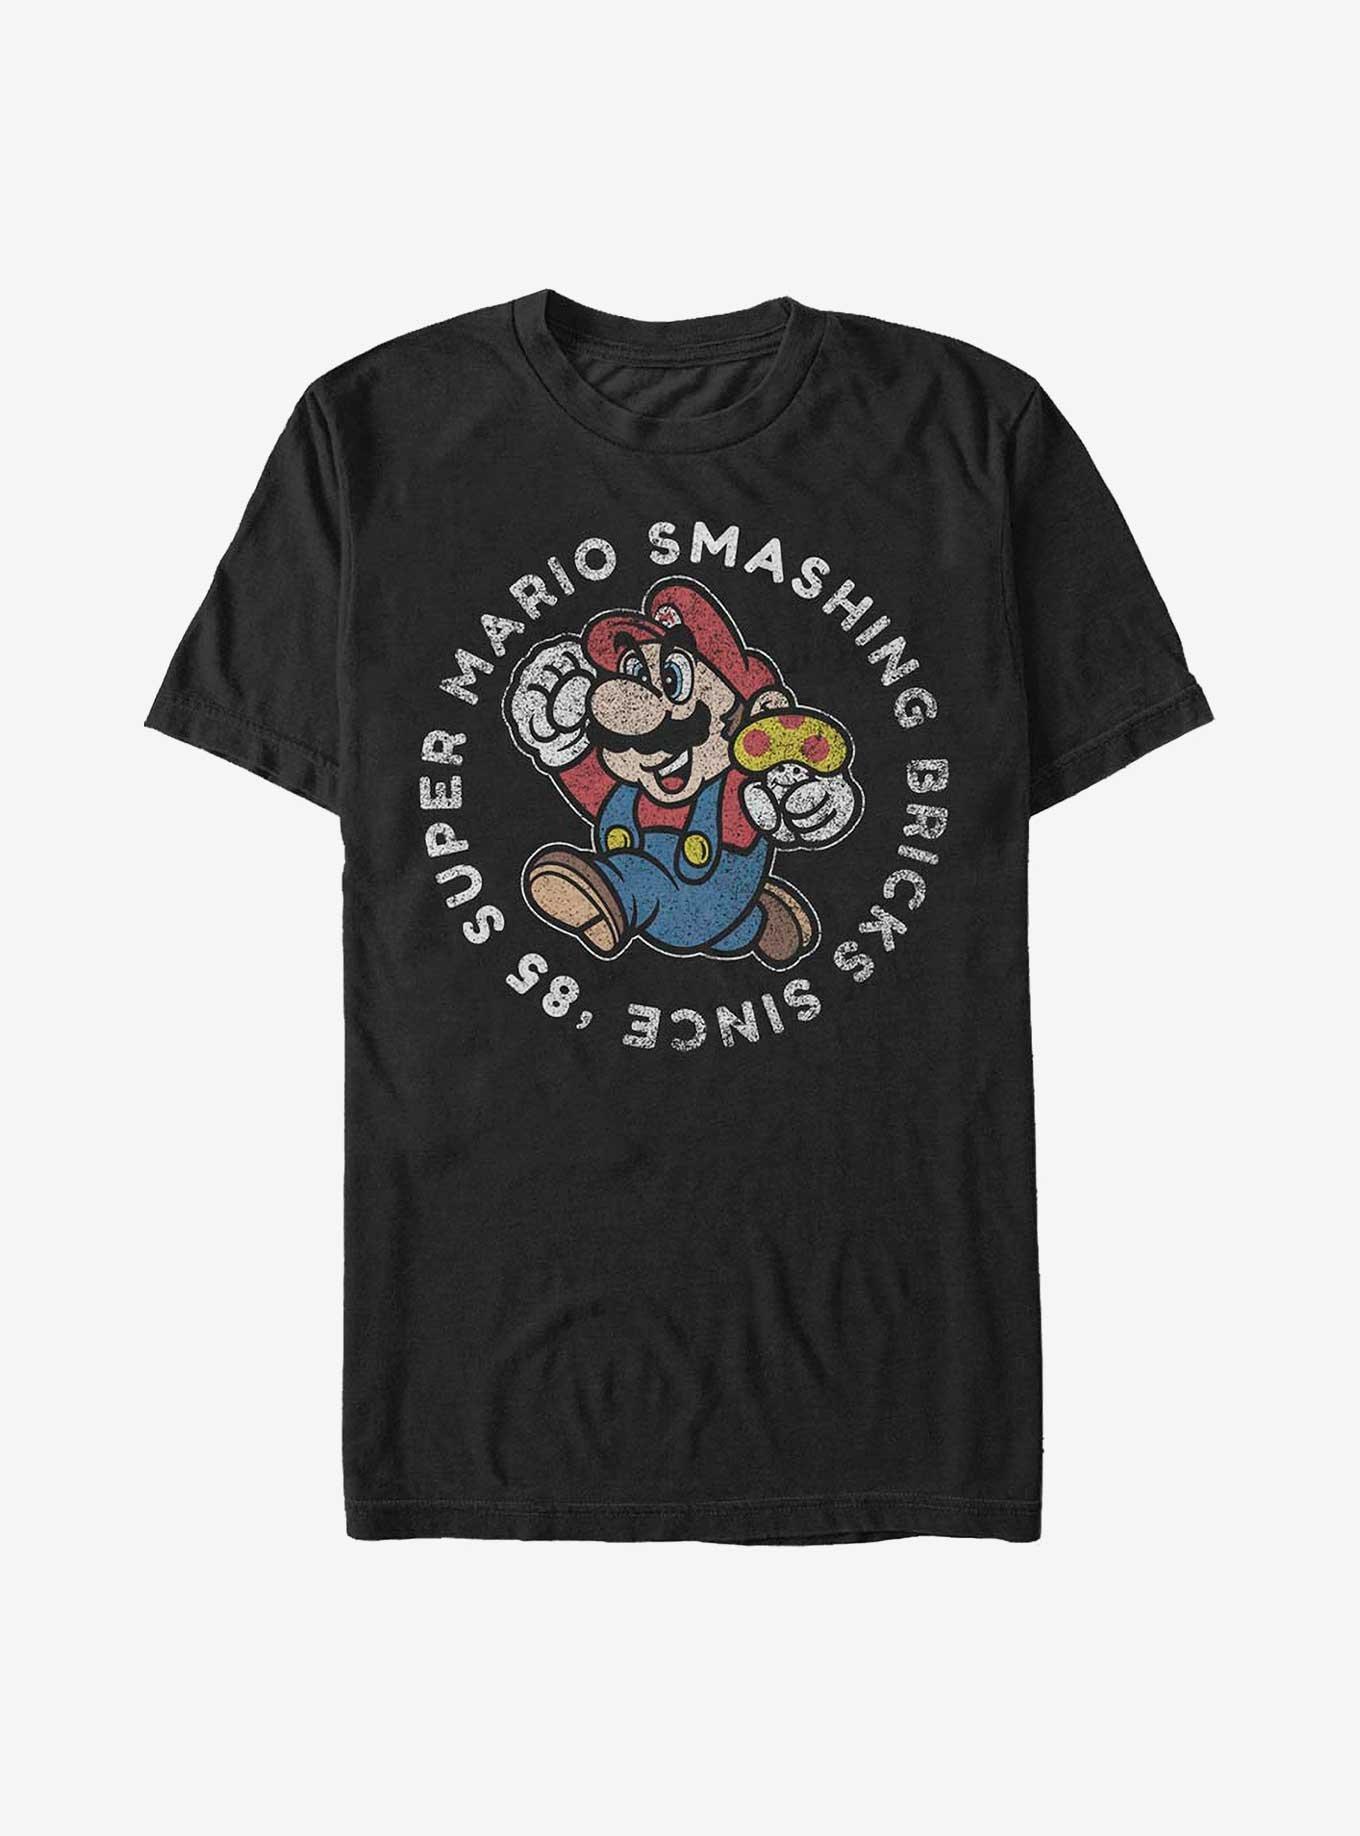 Nintendo Mario Smashing Brings Since '85 T-Shirt, BLACK, hi-res